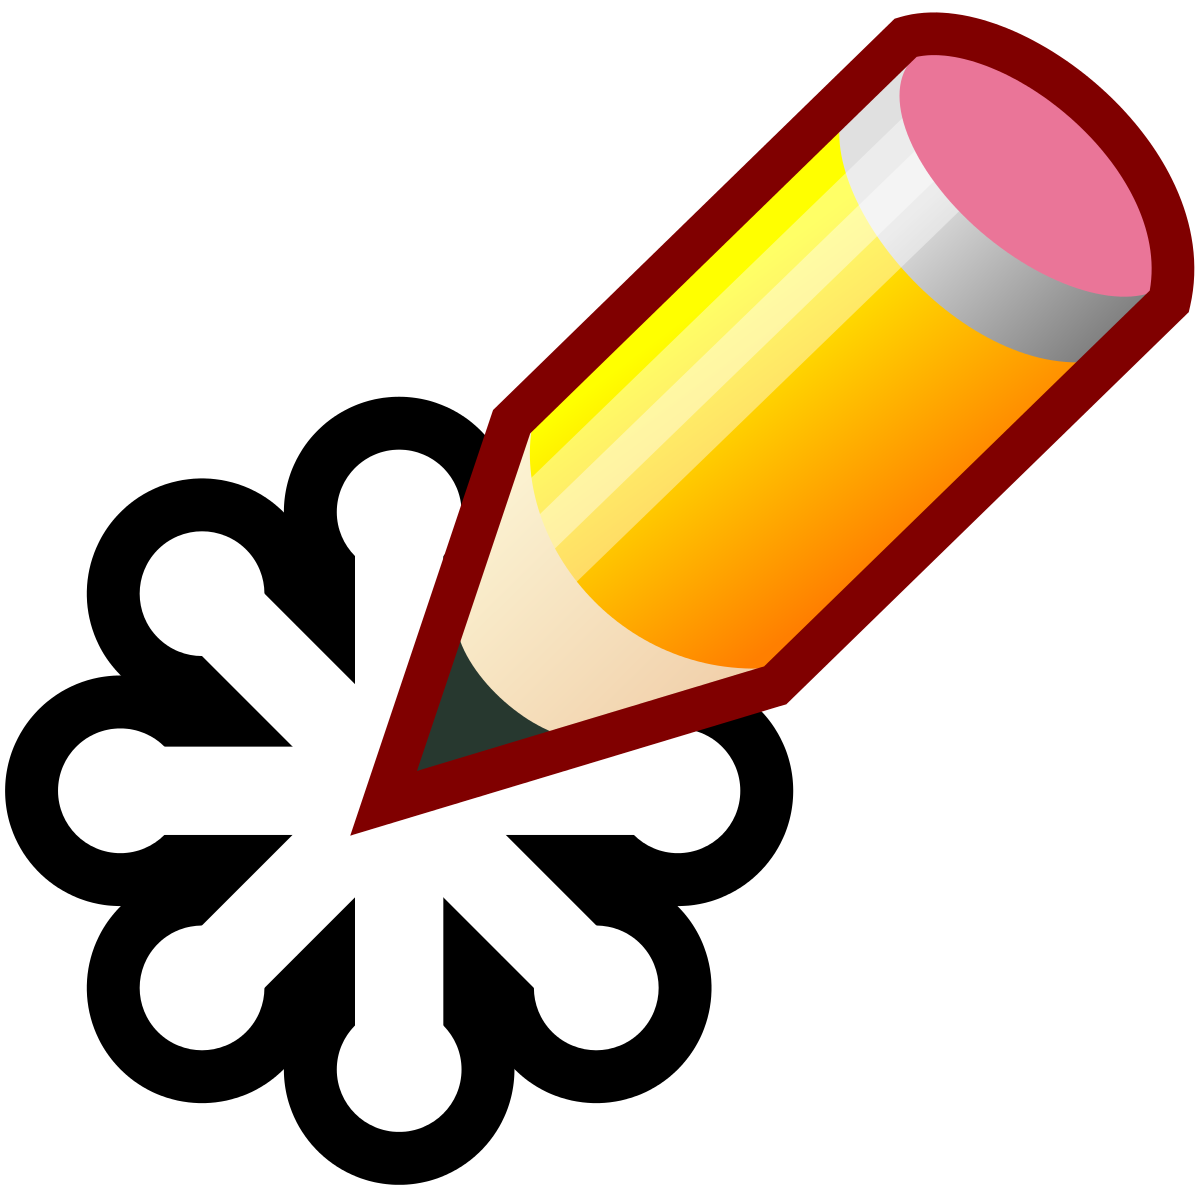 File:SVG-edit logo.svg - Wikipedia